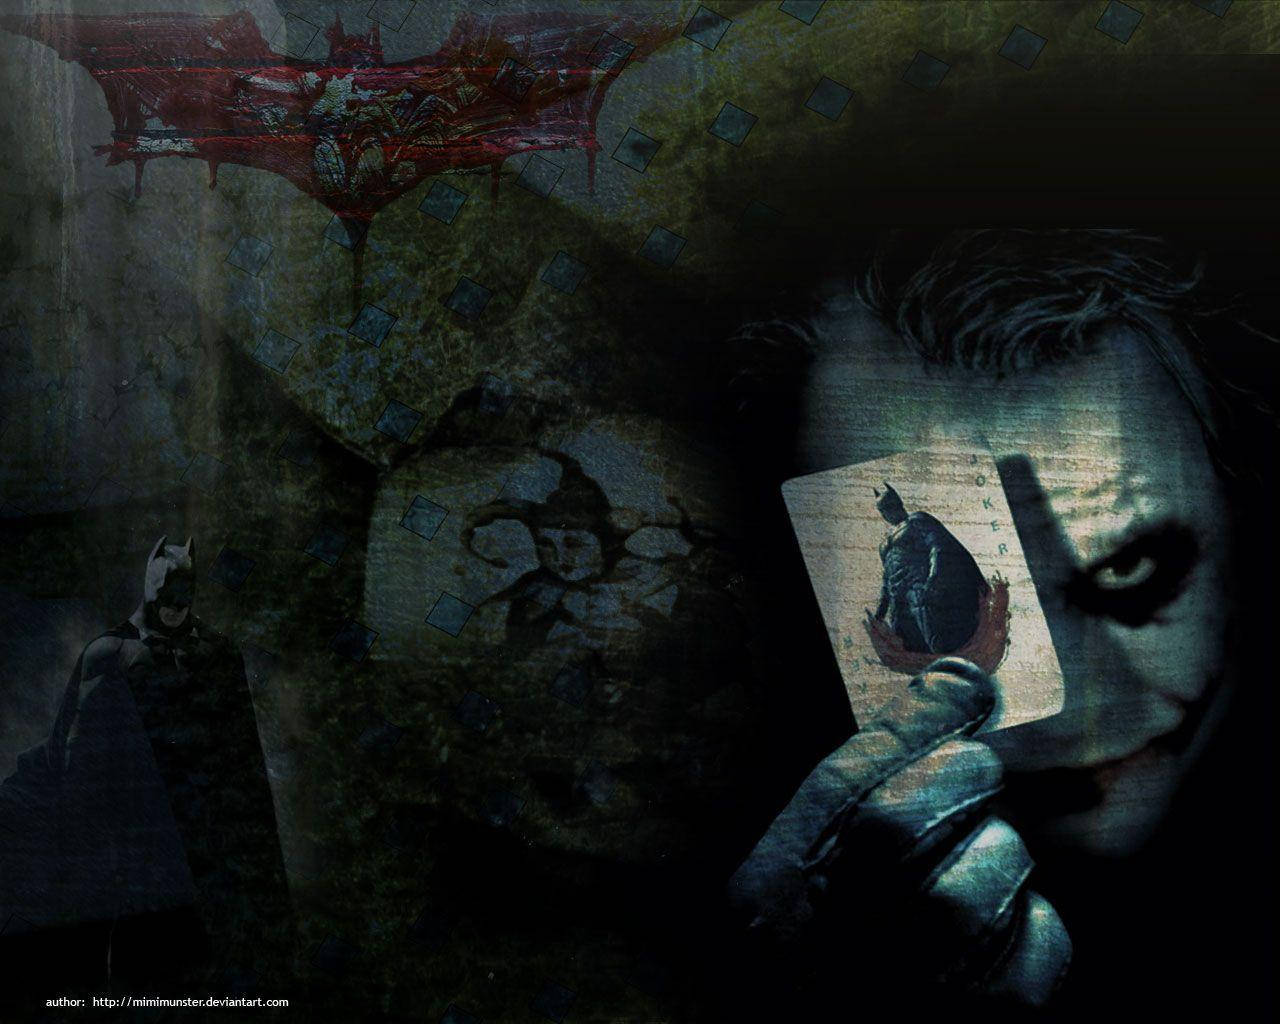 Joker 1280X1024 Wallpaper and Background Image